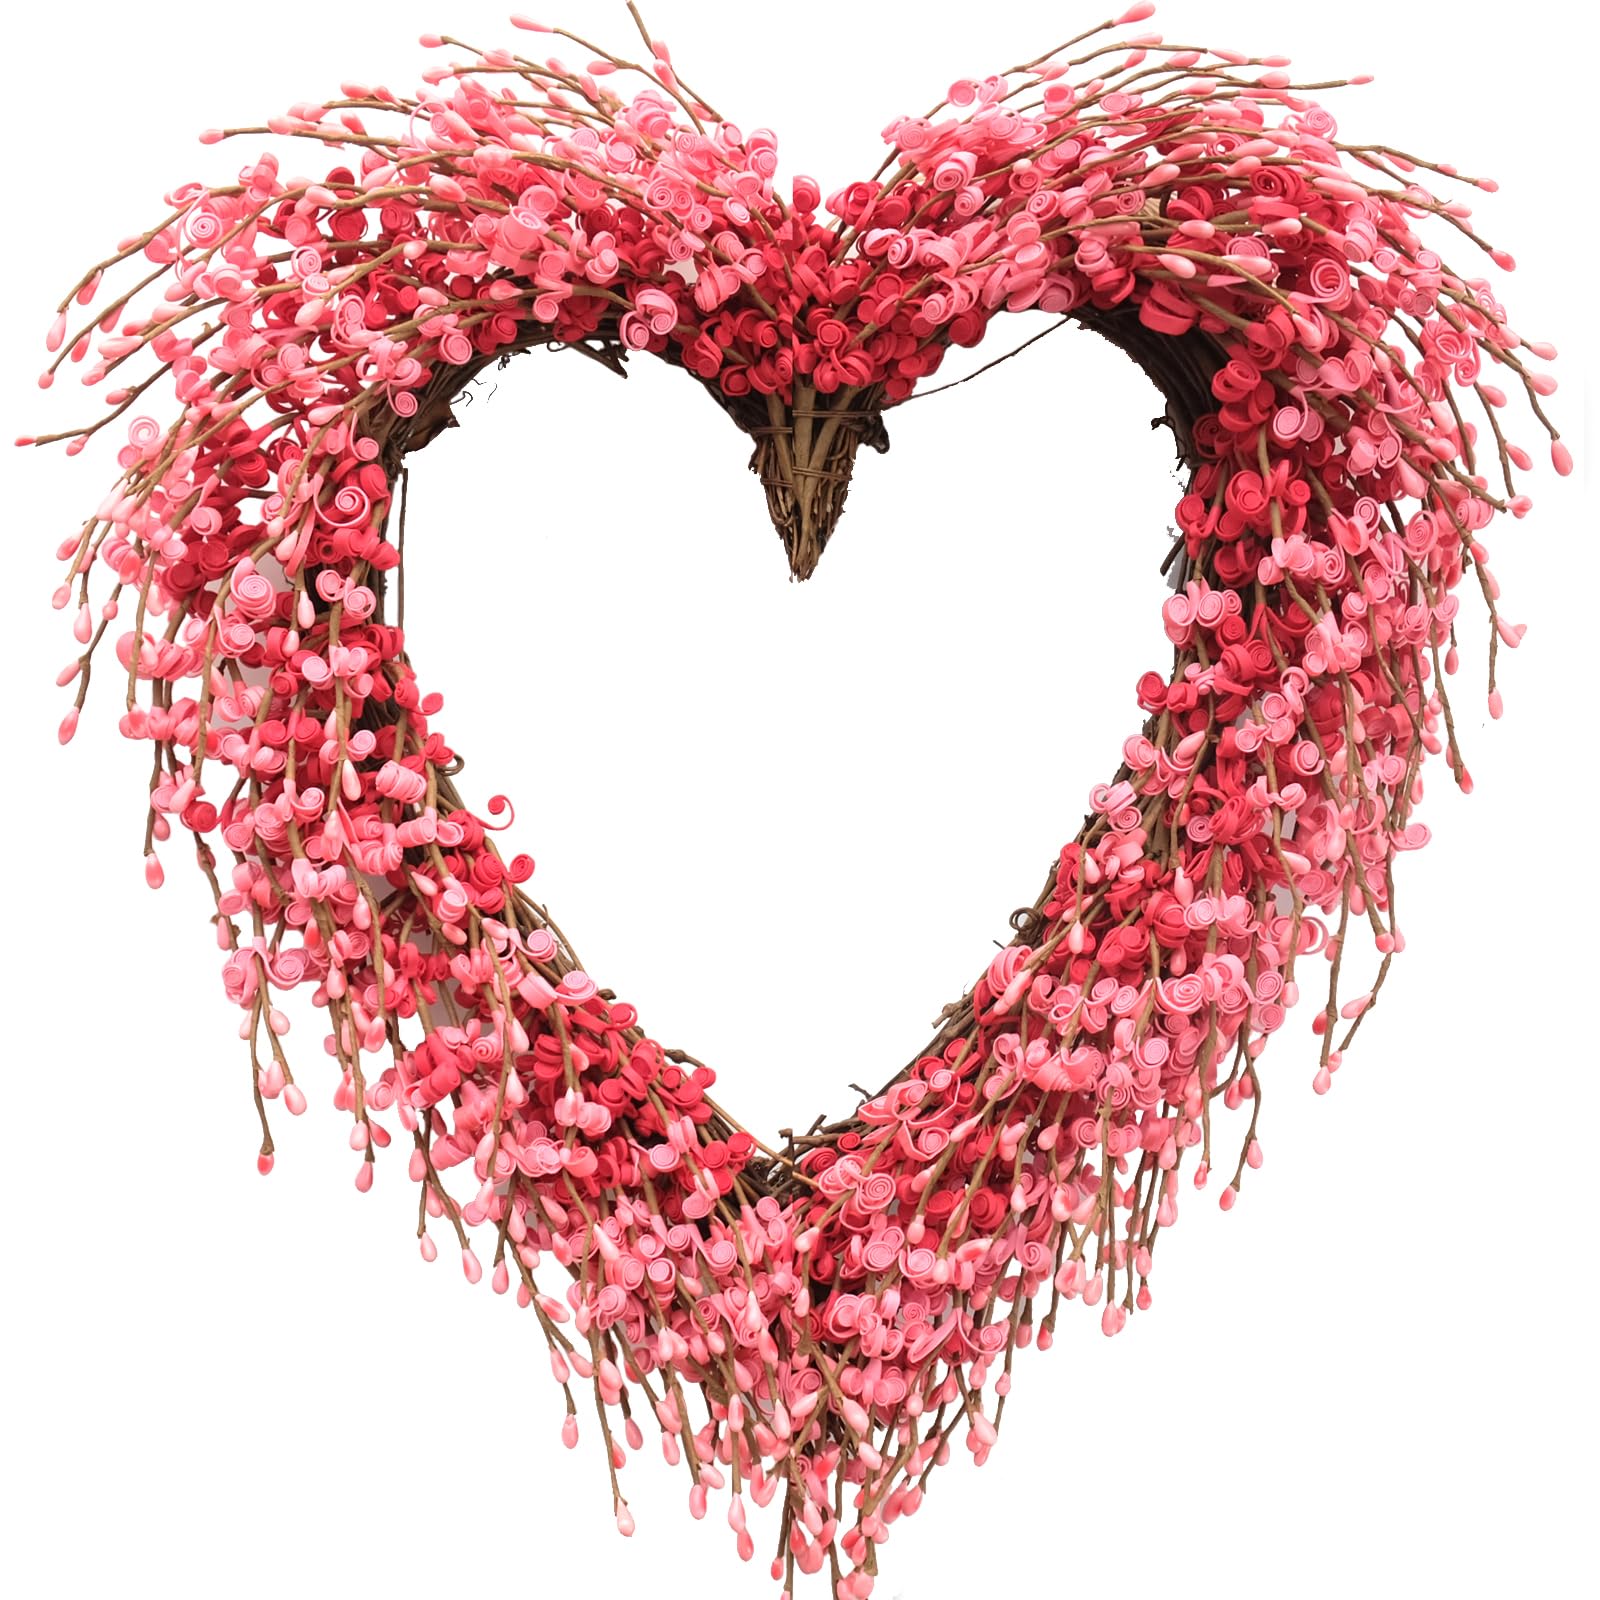 Idyllic Heart Wreath